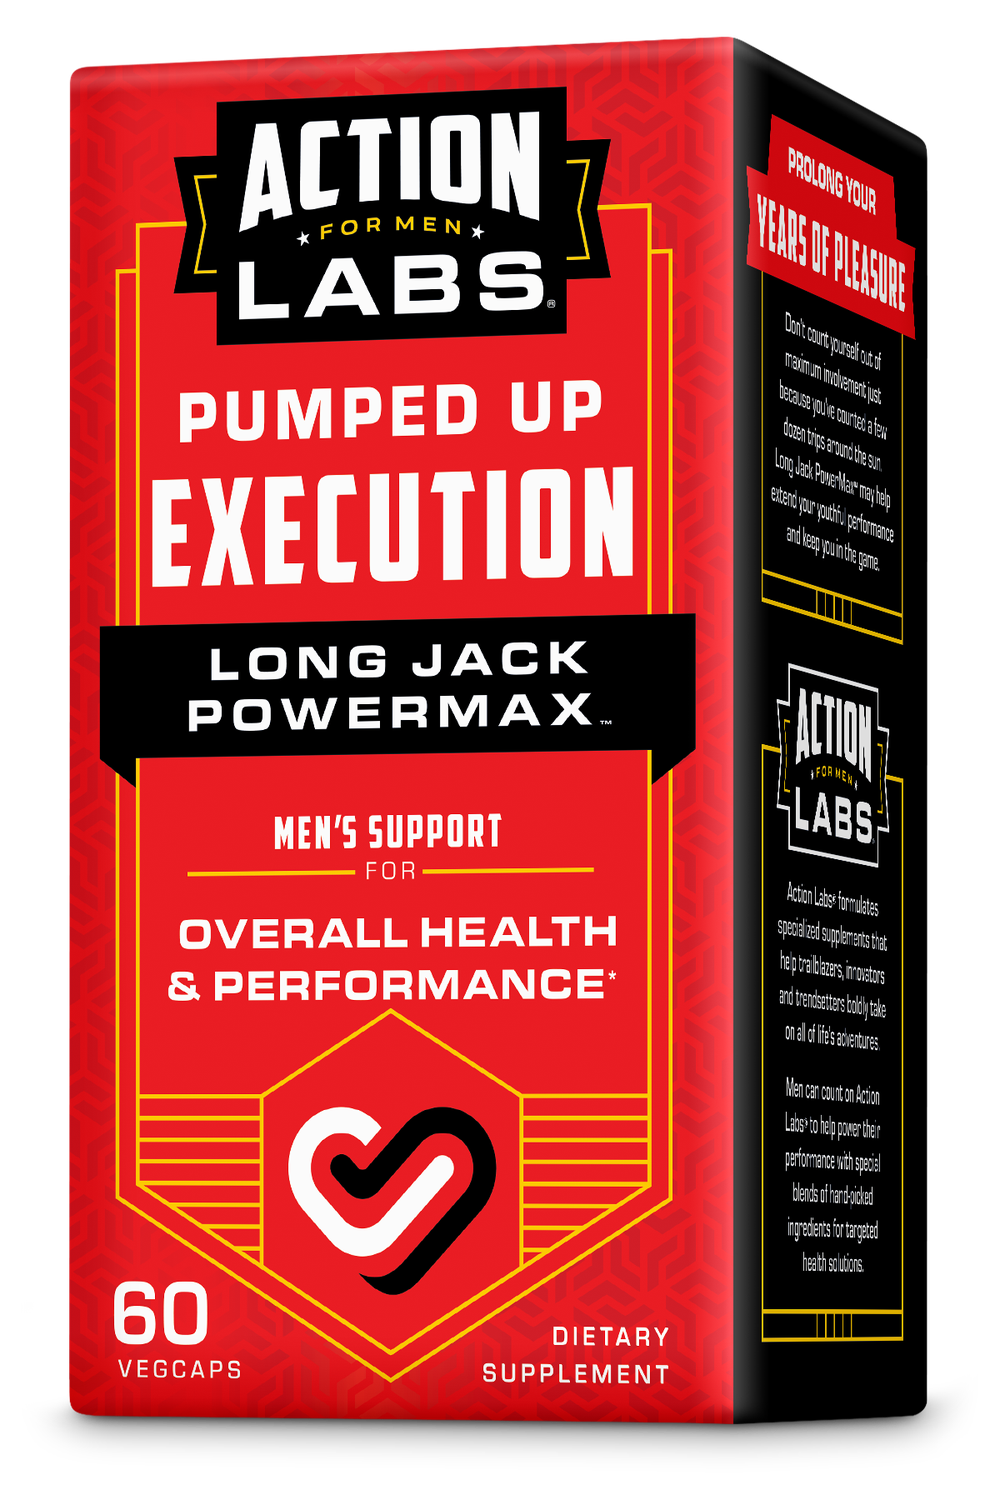 Pumped Up Execution | Long Jack PowerMax